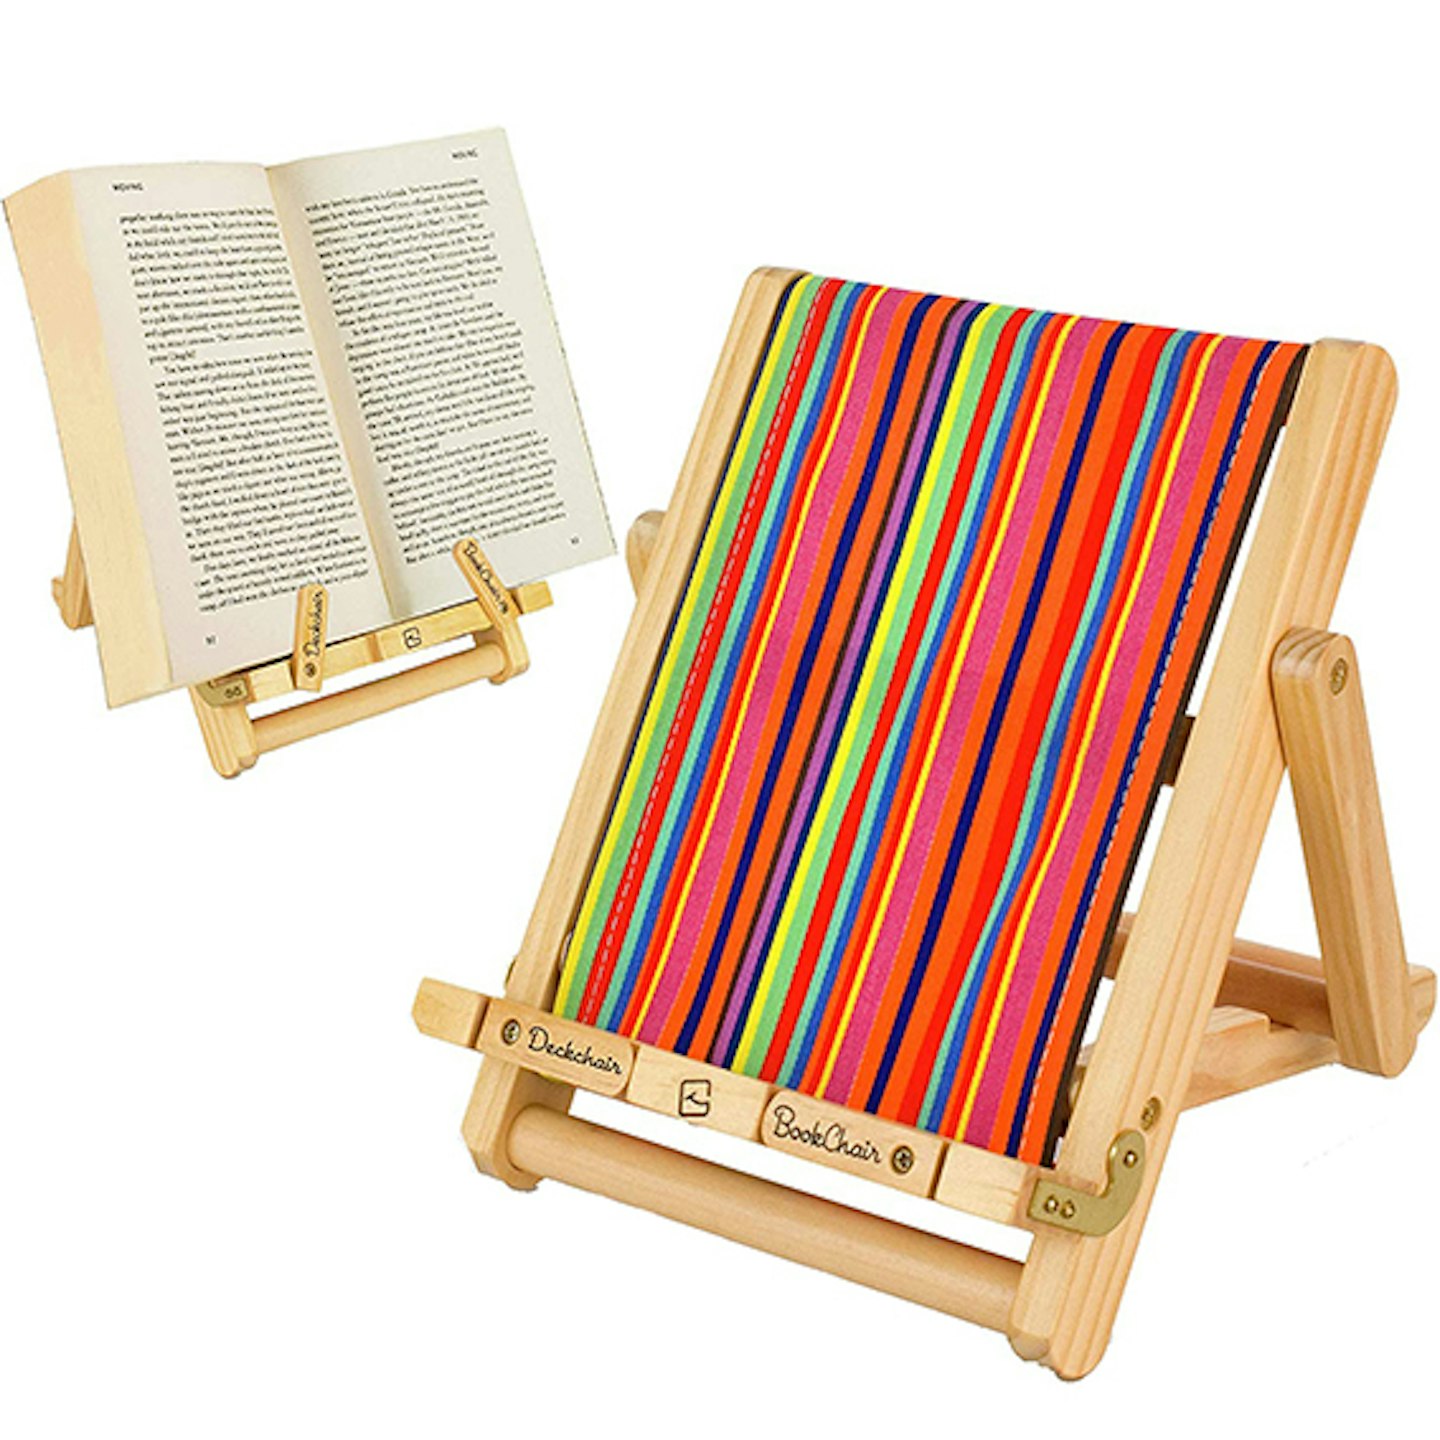 Deckchair Bookchair book holder